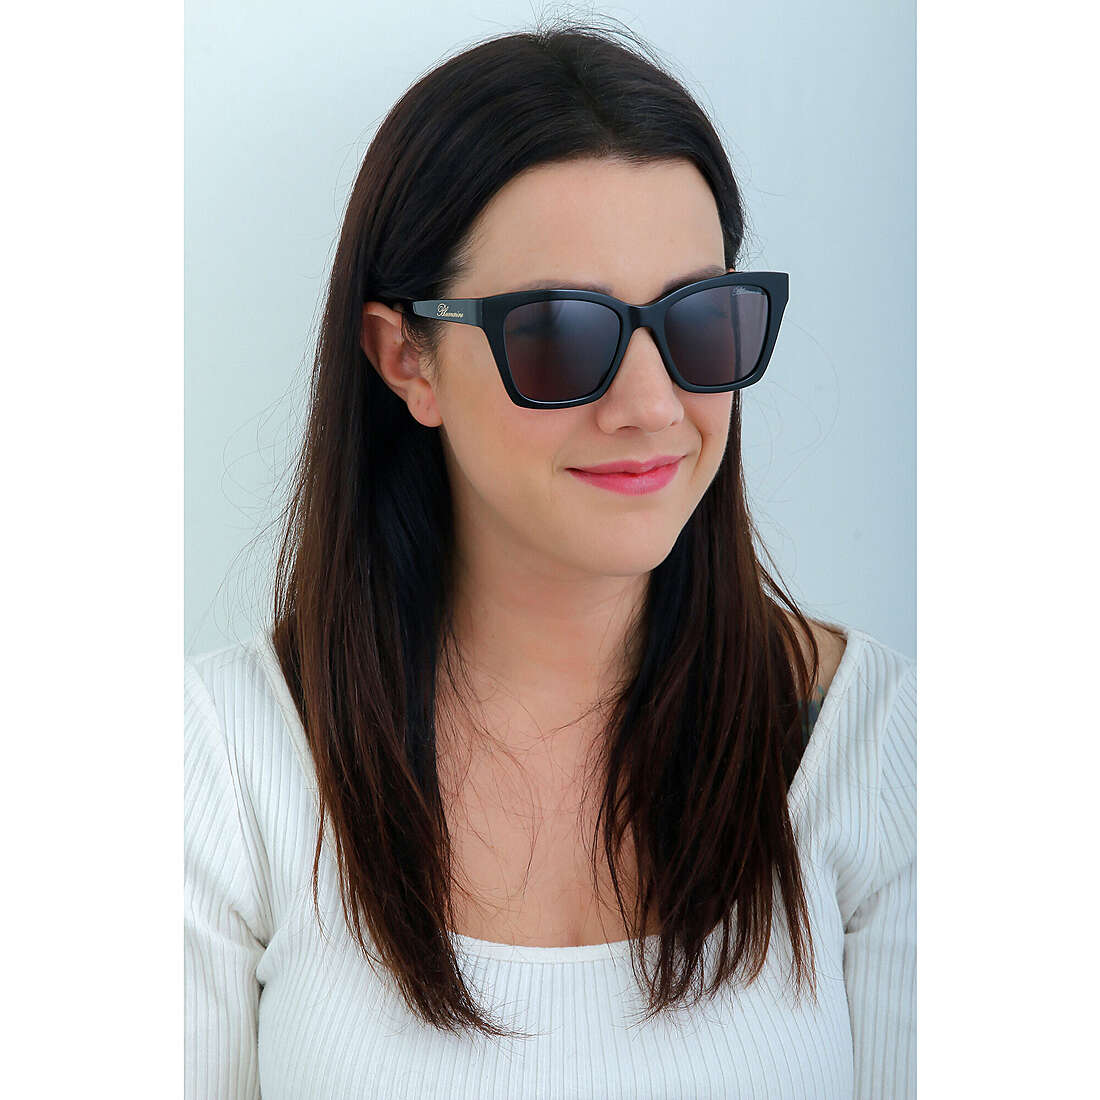 Blumarine occhiali da sole donna SBM8050700 indosso